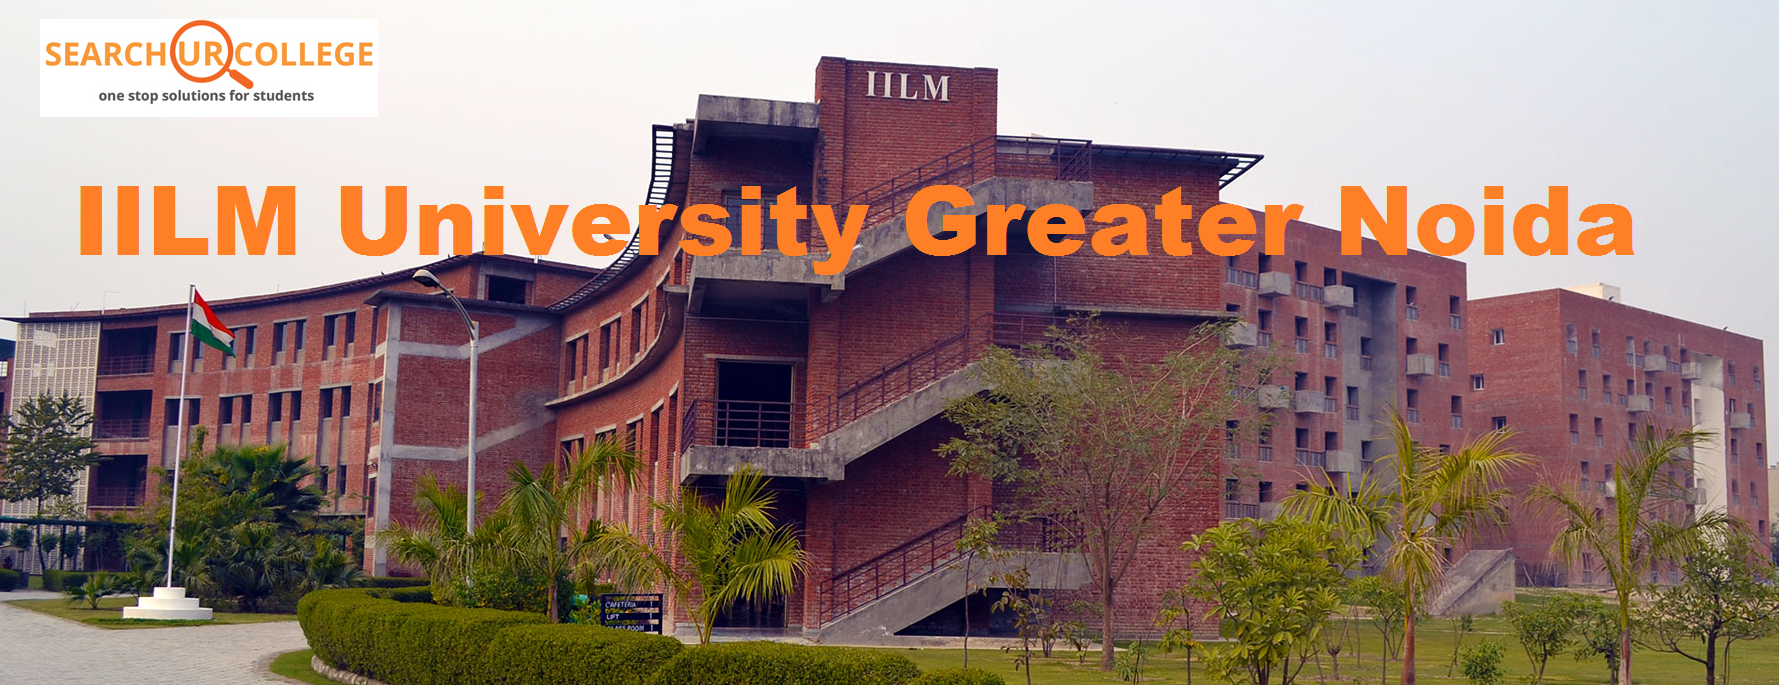 IILM University Greater Noida